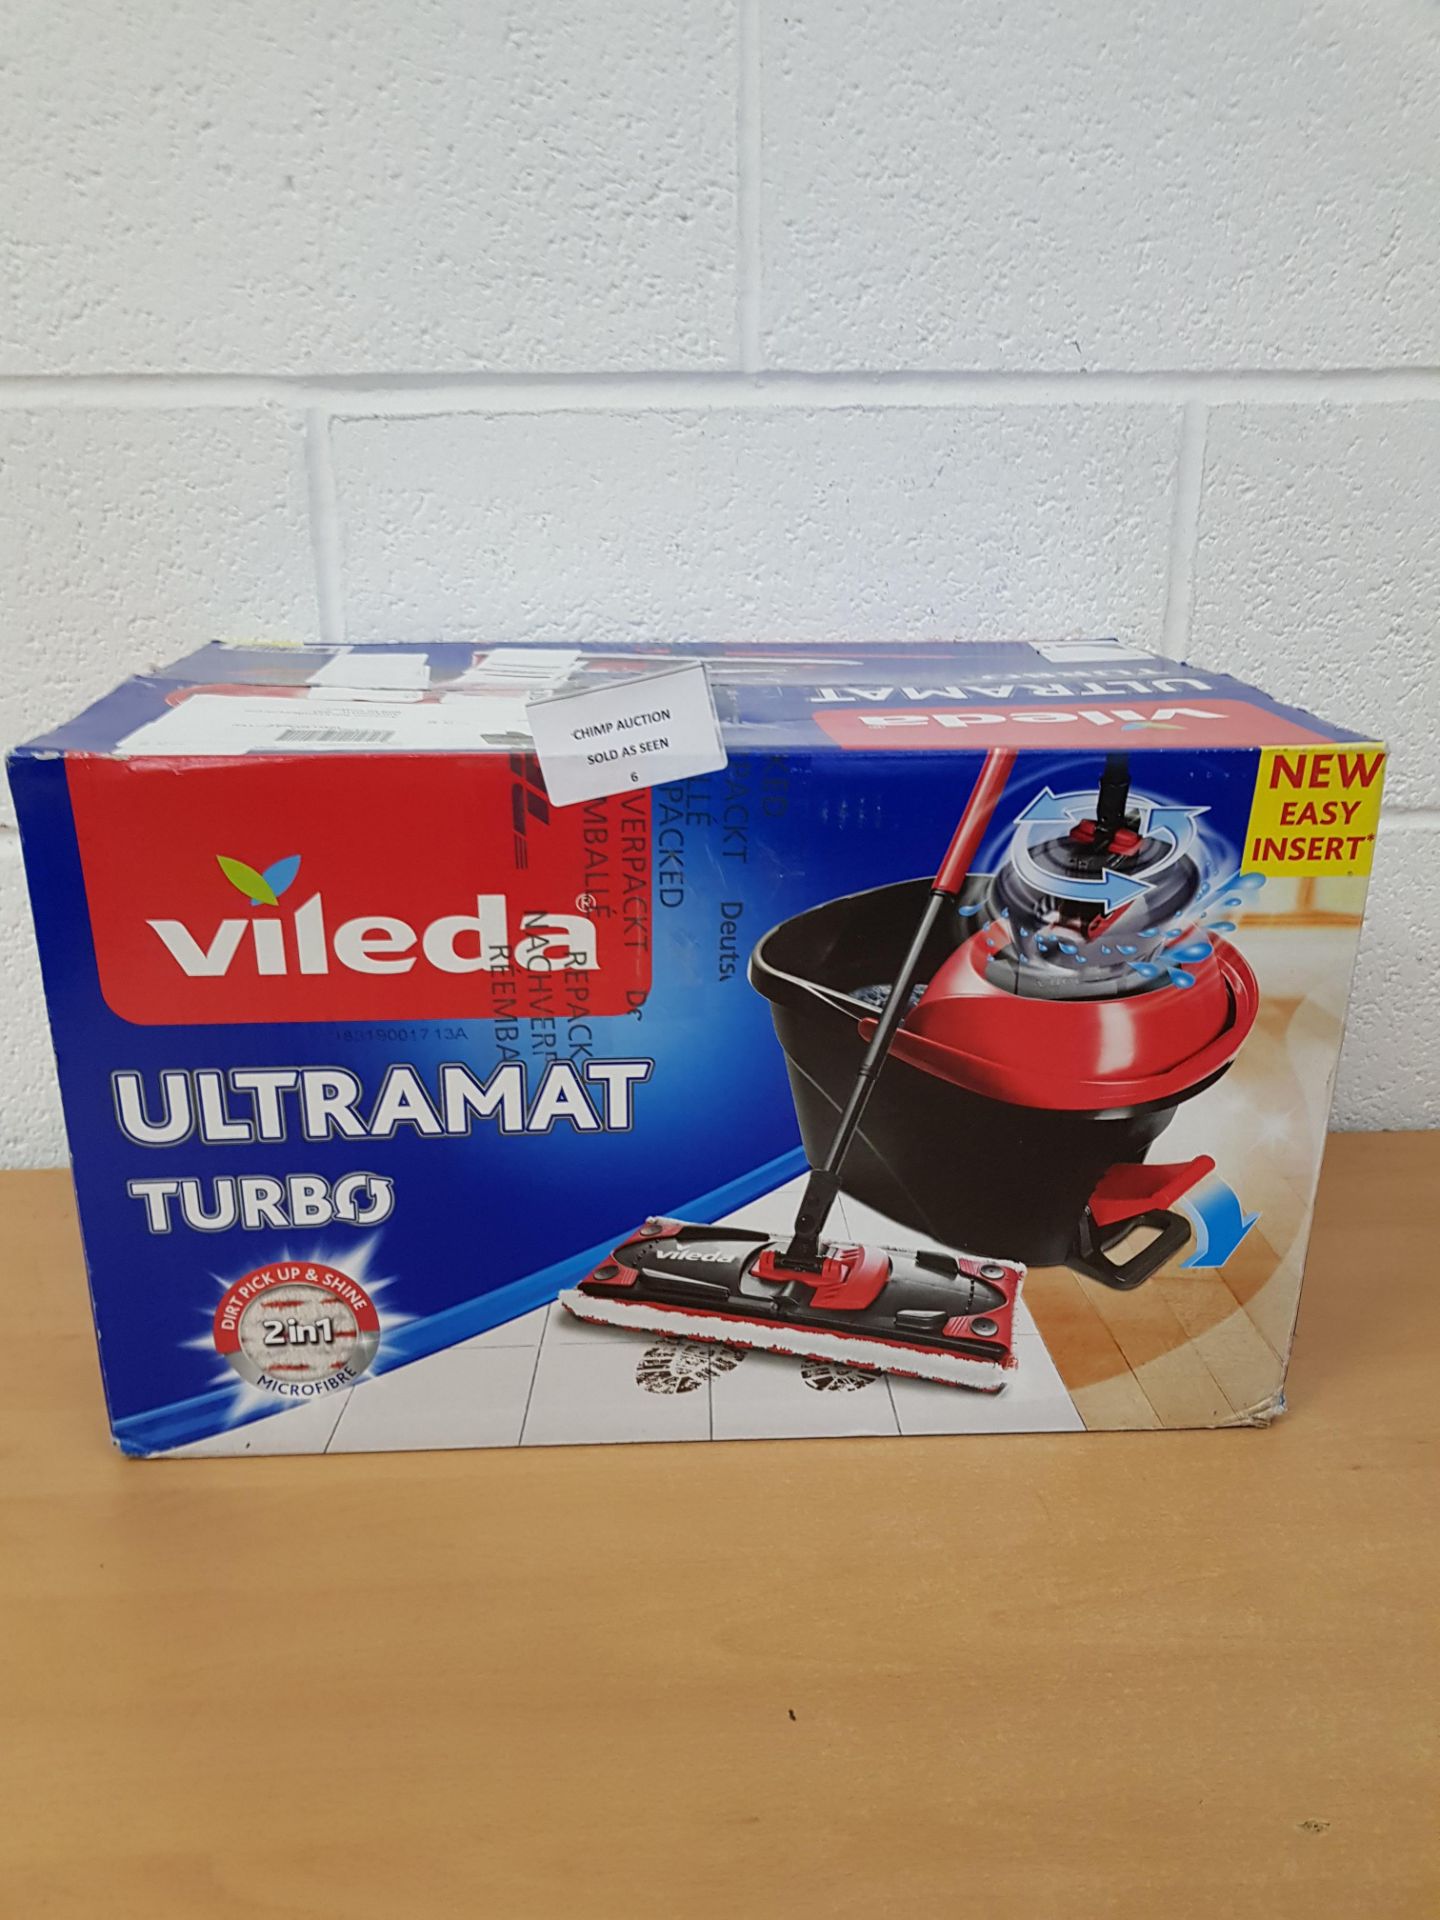 Vileda Ultramat Turbo Flat Mop and Bucket Set RRP £49.99.